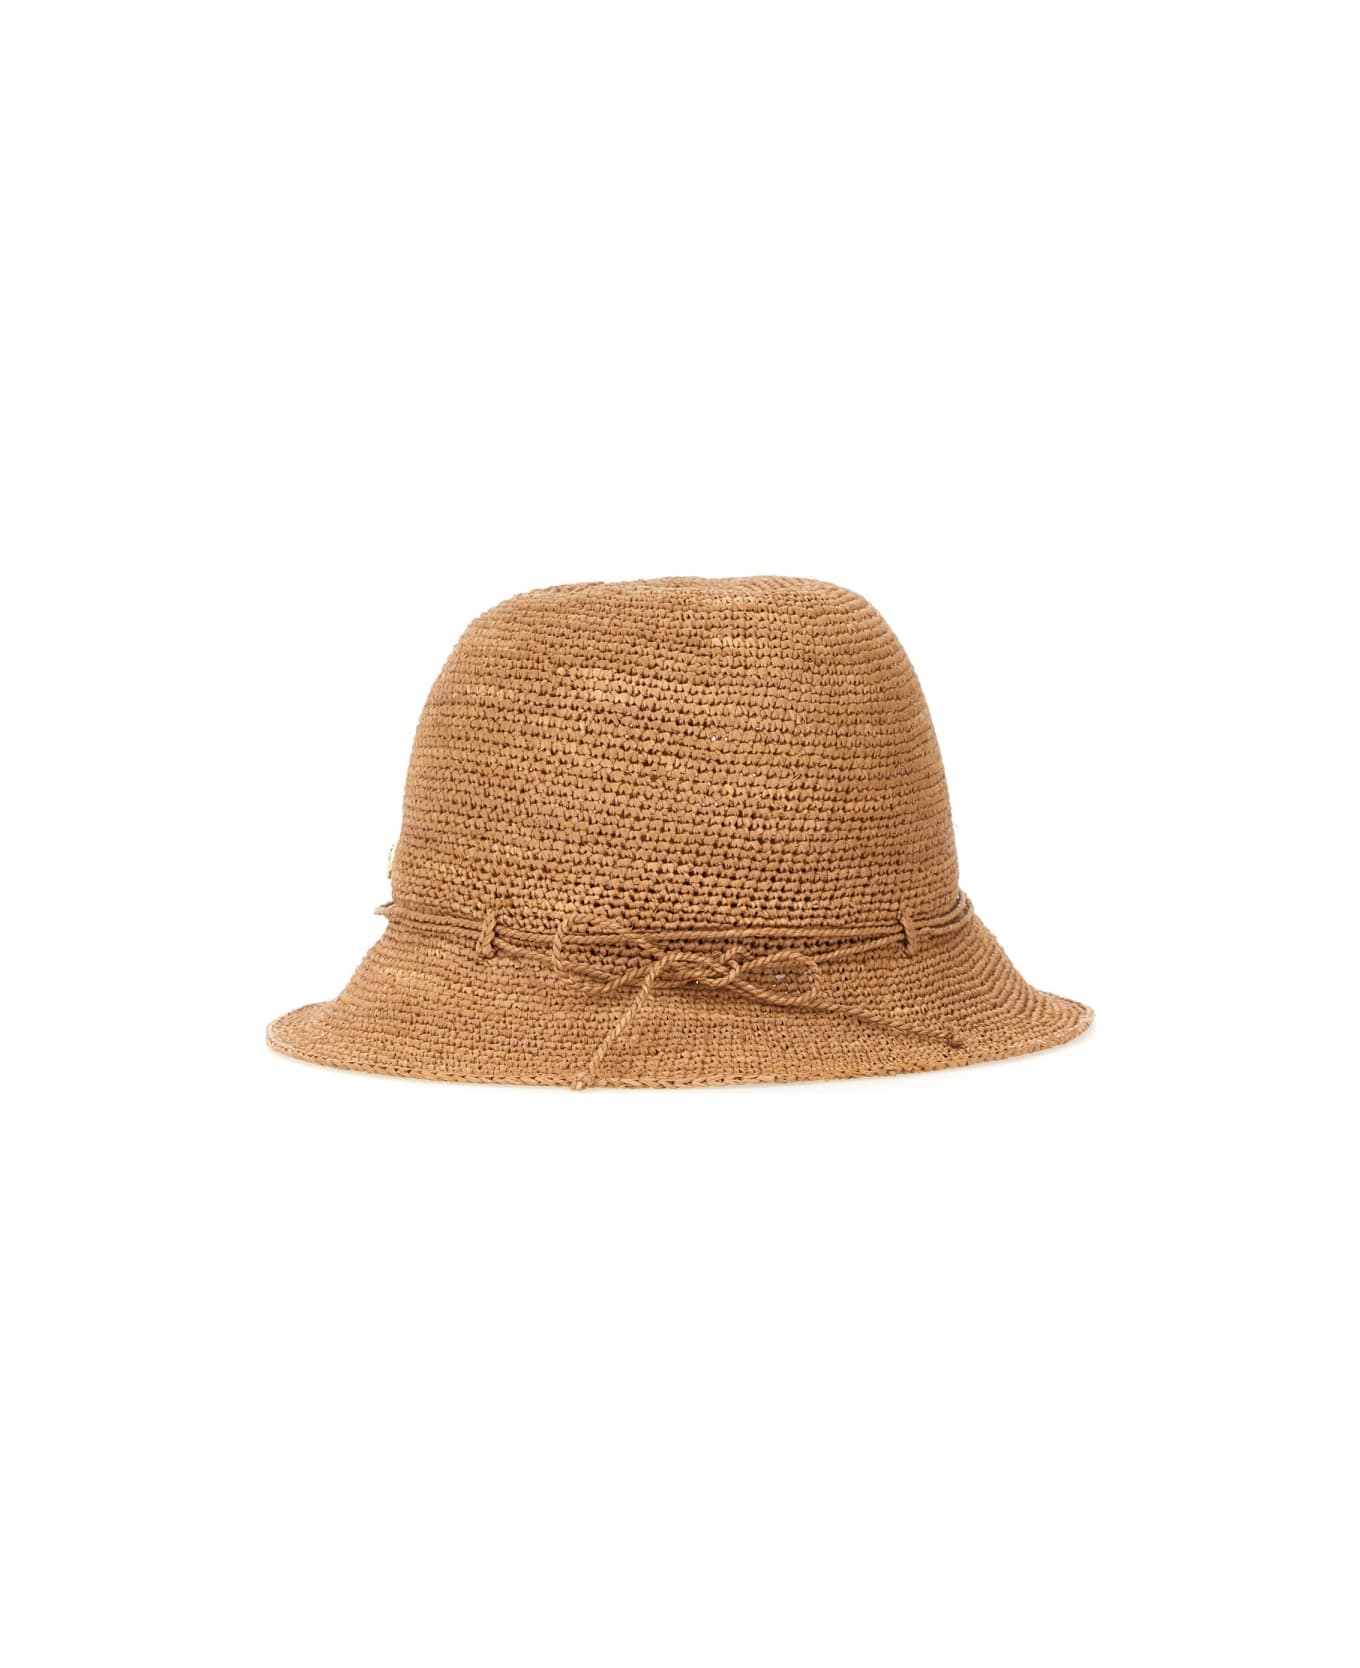 Helen Kaminski "villa 6" Hat - BEIGE 帽子